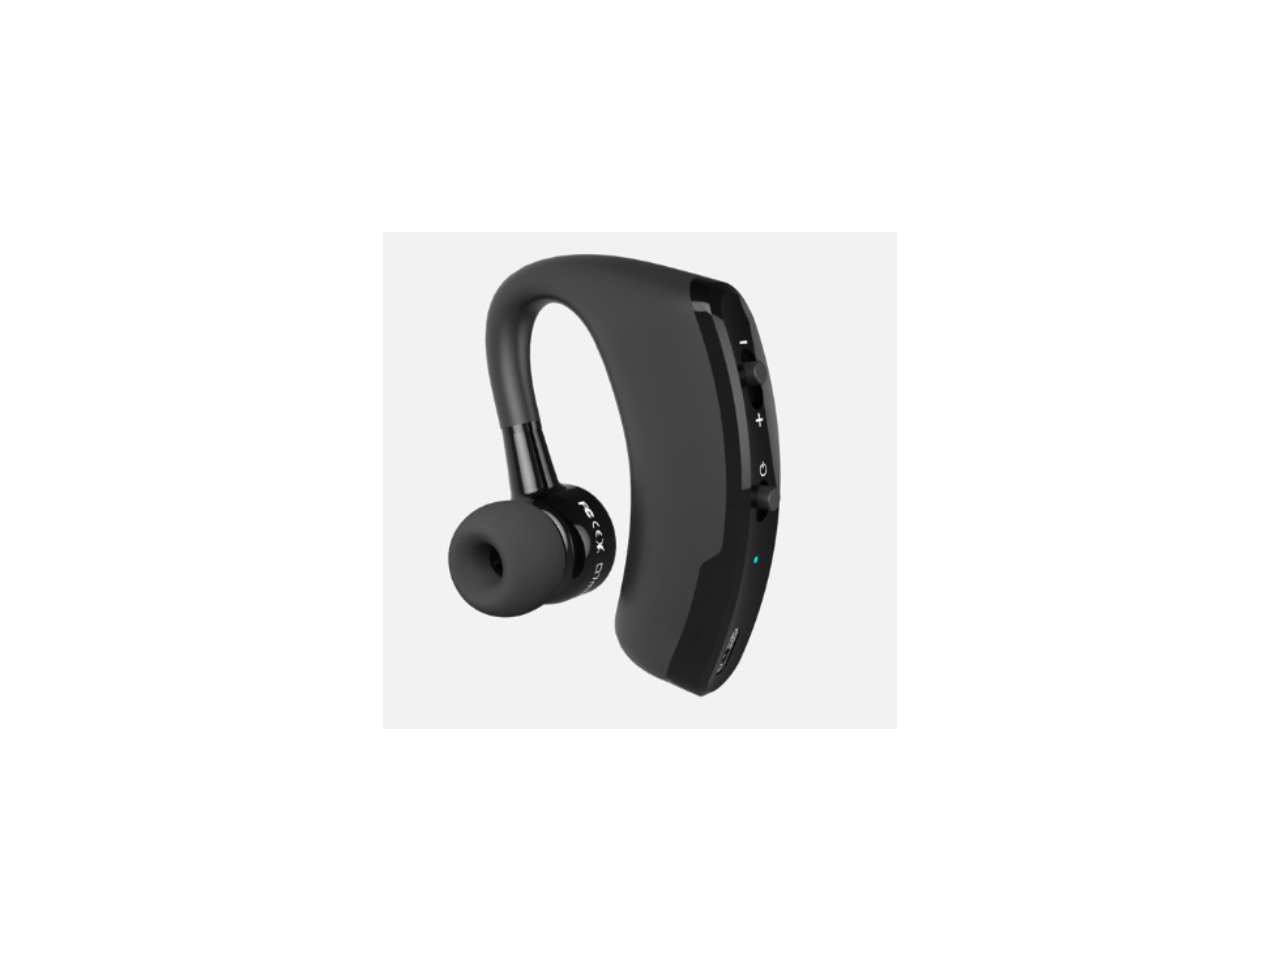 V9 Wireless Headset Bluetooth Stereo Earphone Headphone with Mic